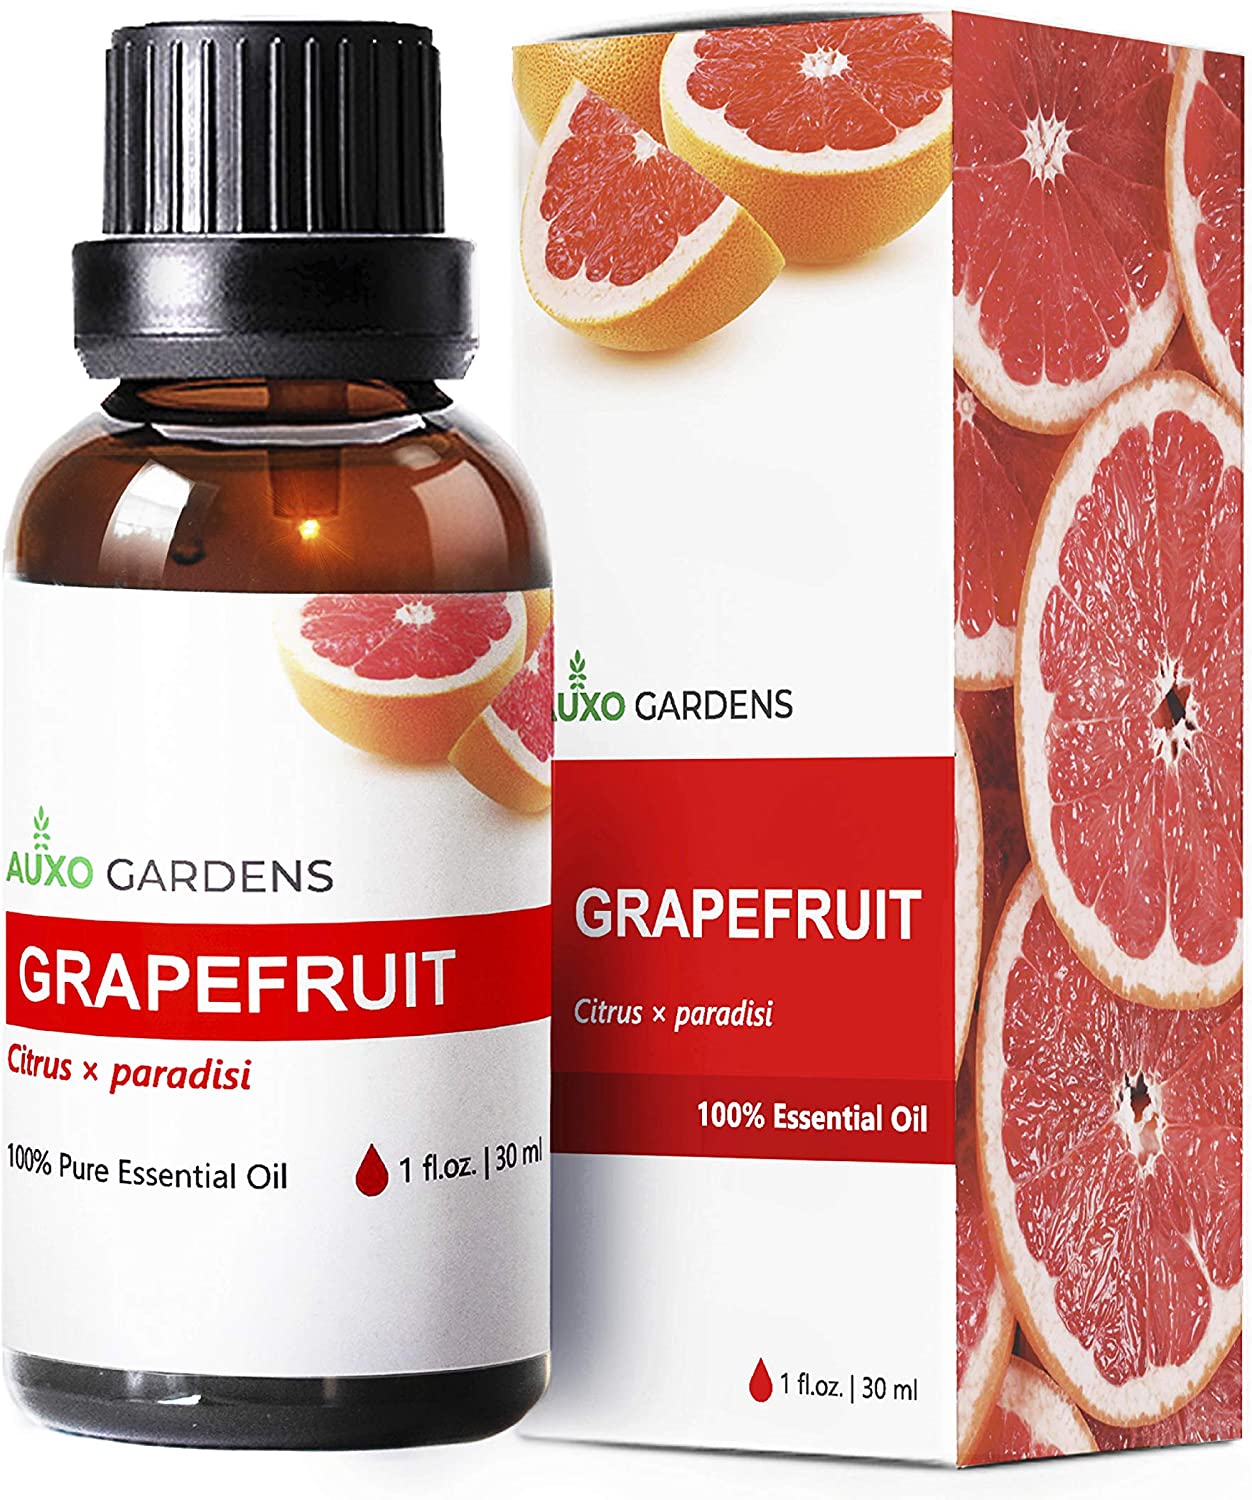 Pink Grapefruit Essential Oil - 4 oz. - Essential Oils - African